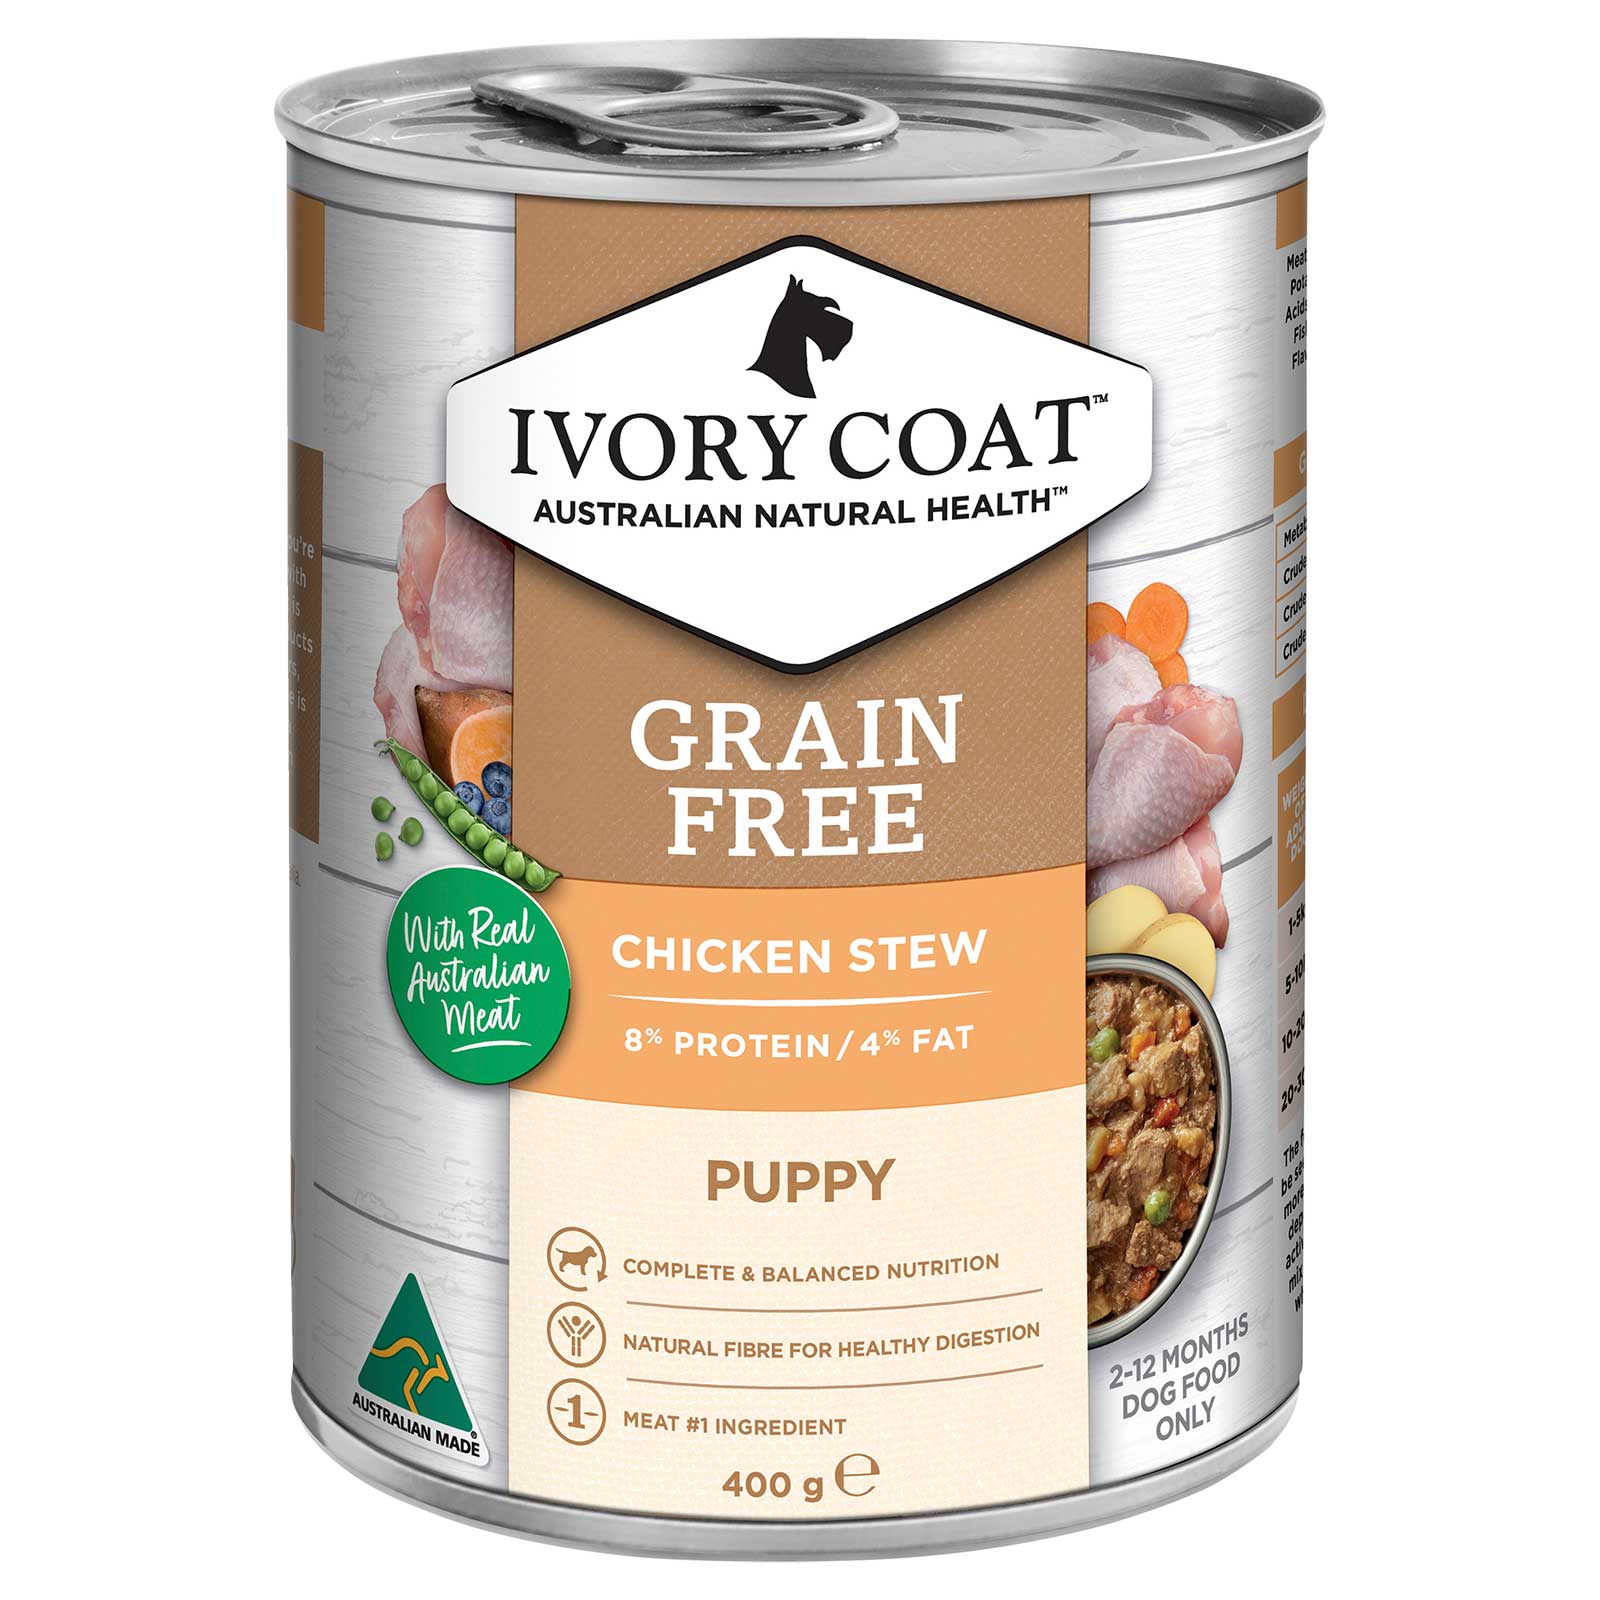 Ivory Coat Grain Free Dog Food Can Puppy Chicken Stew